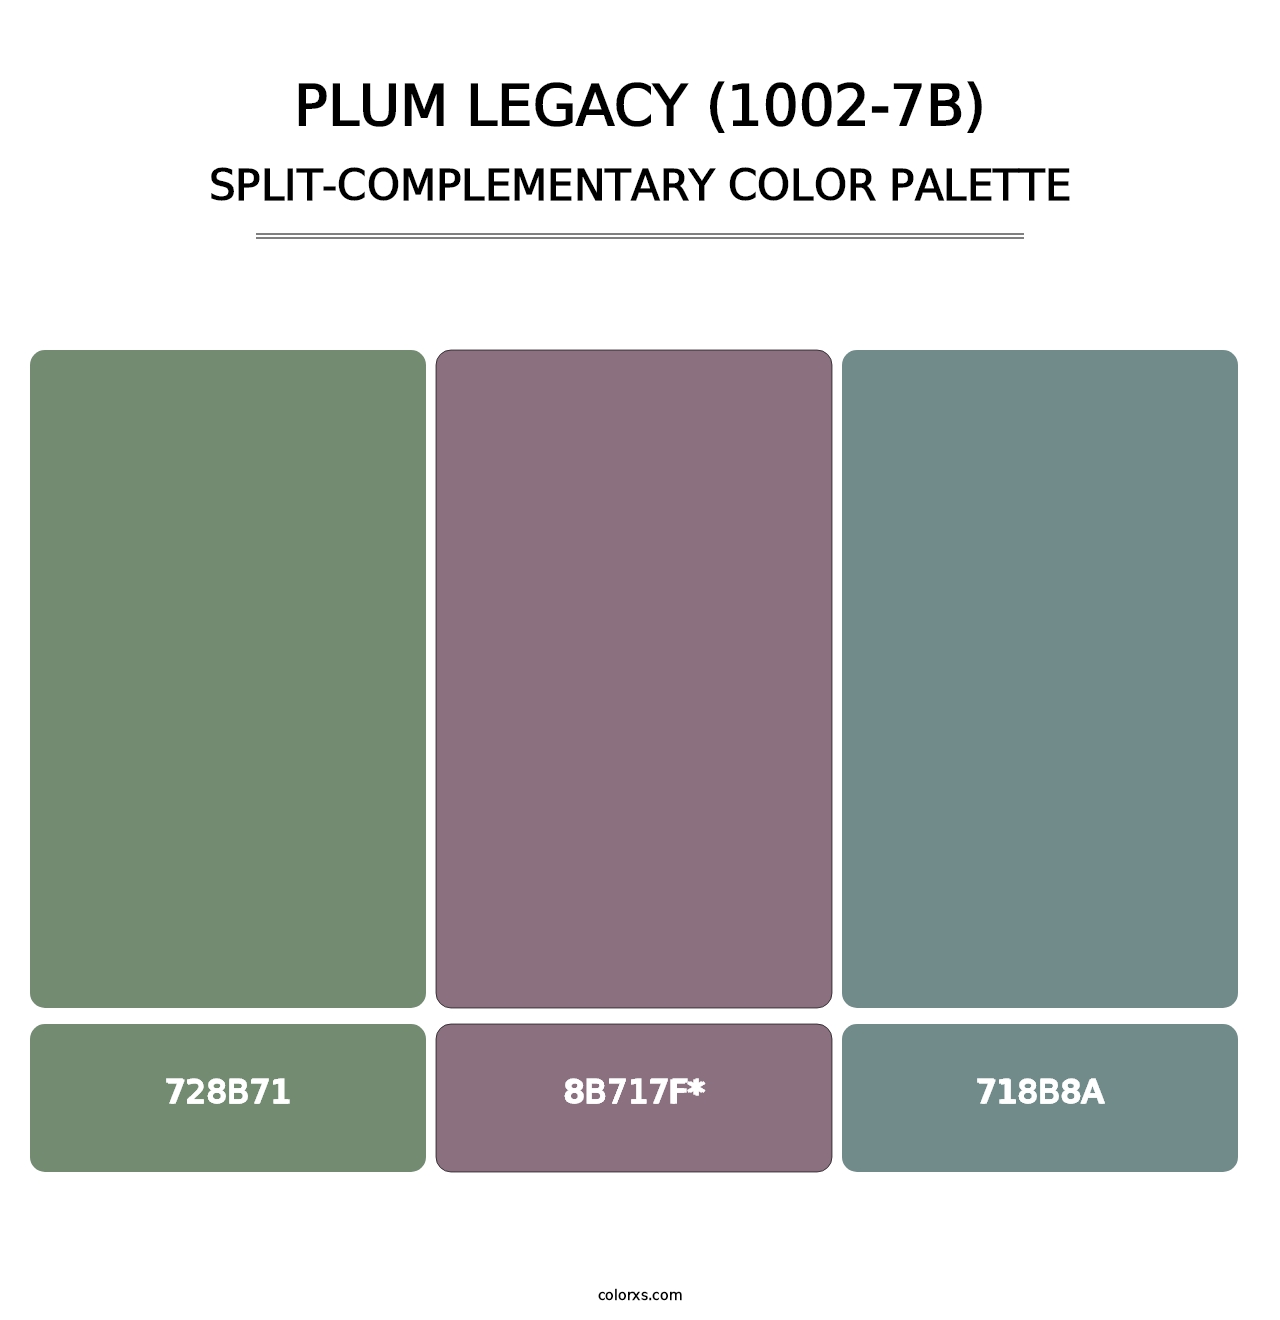 Plum Legacy (1002-7B) - Split-Complementary Color Palette